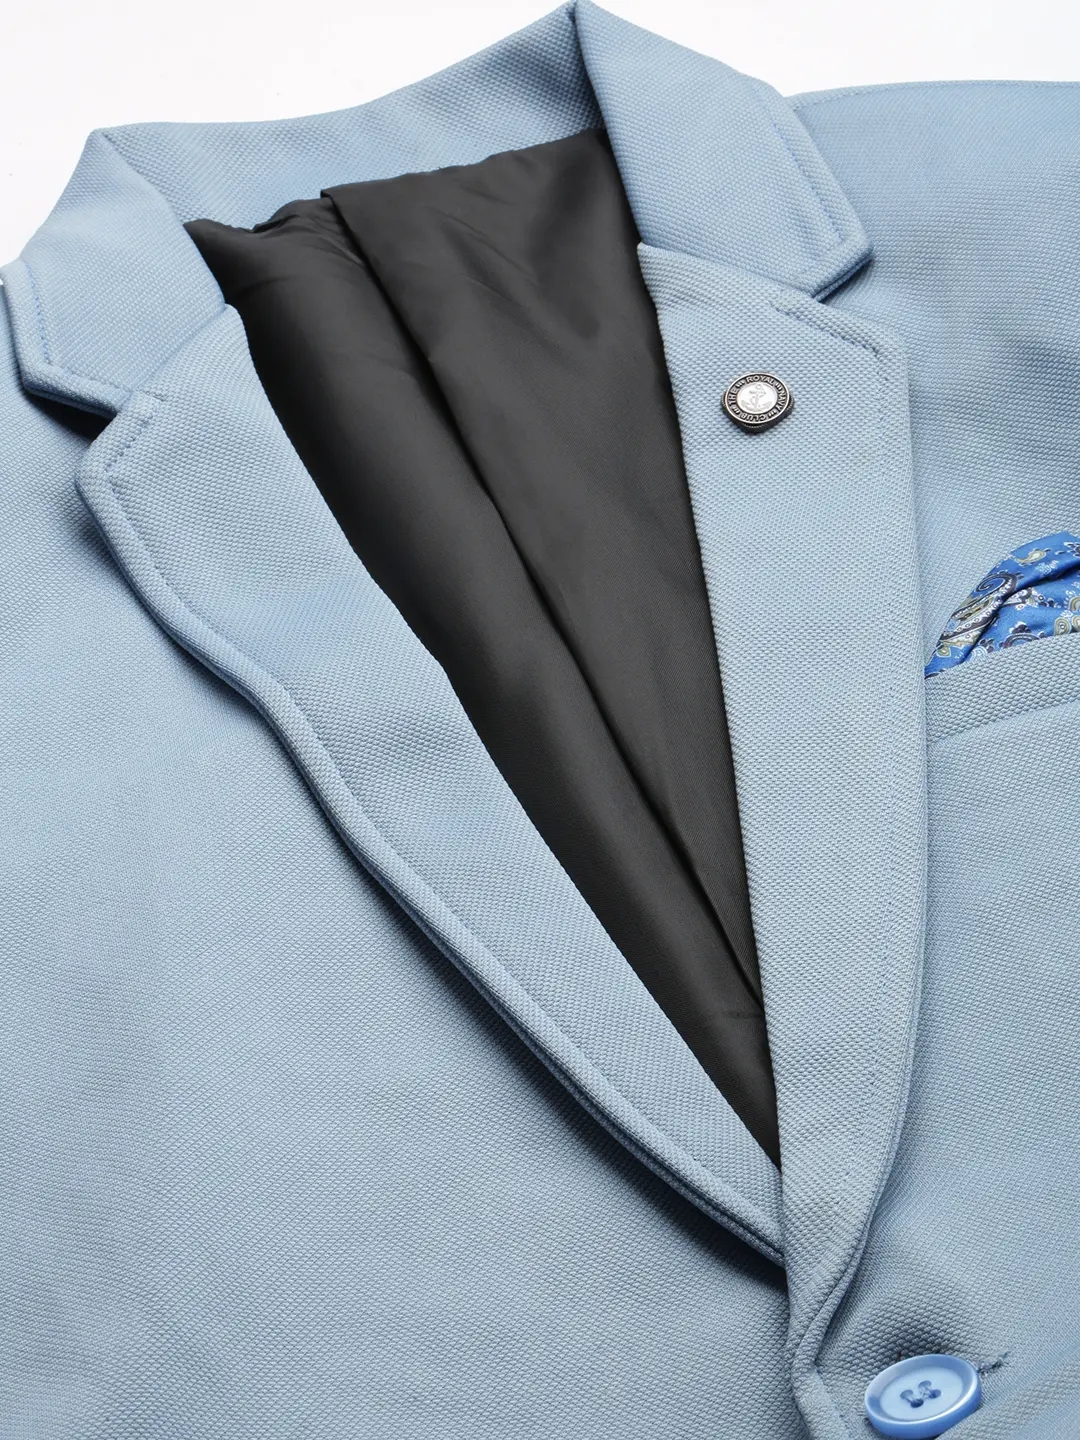 SHOWOFF Men's Notched Lapel Solid Blue Open Front Blazer